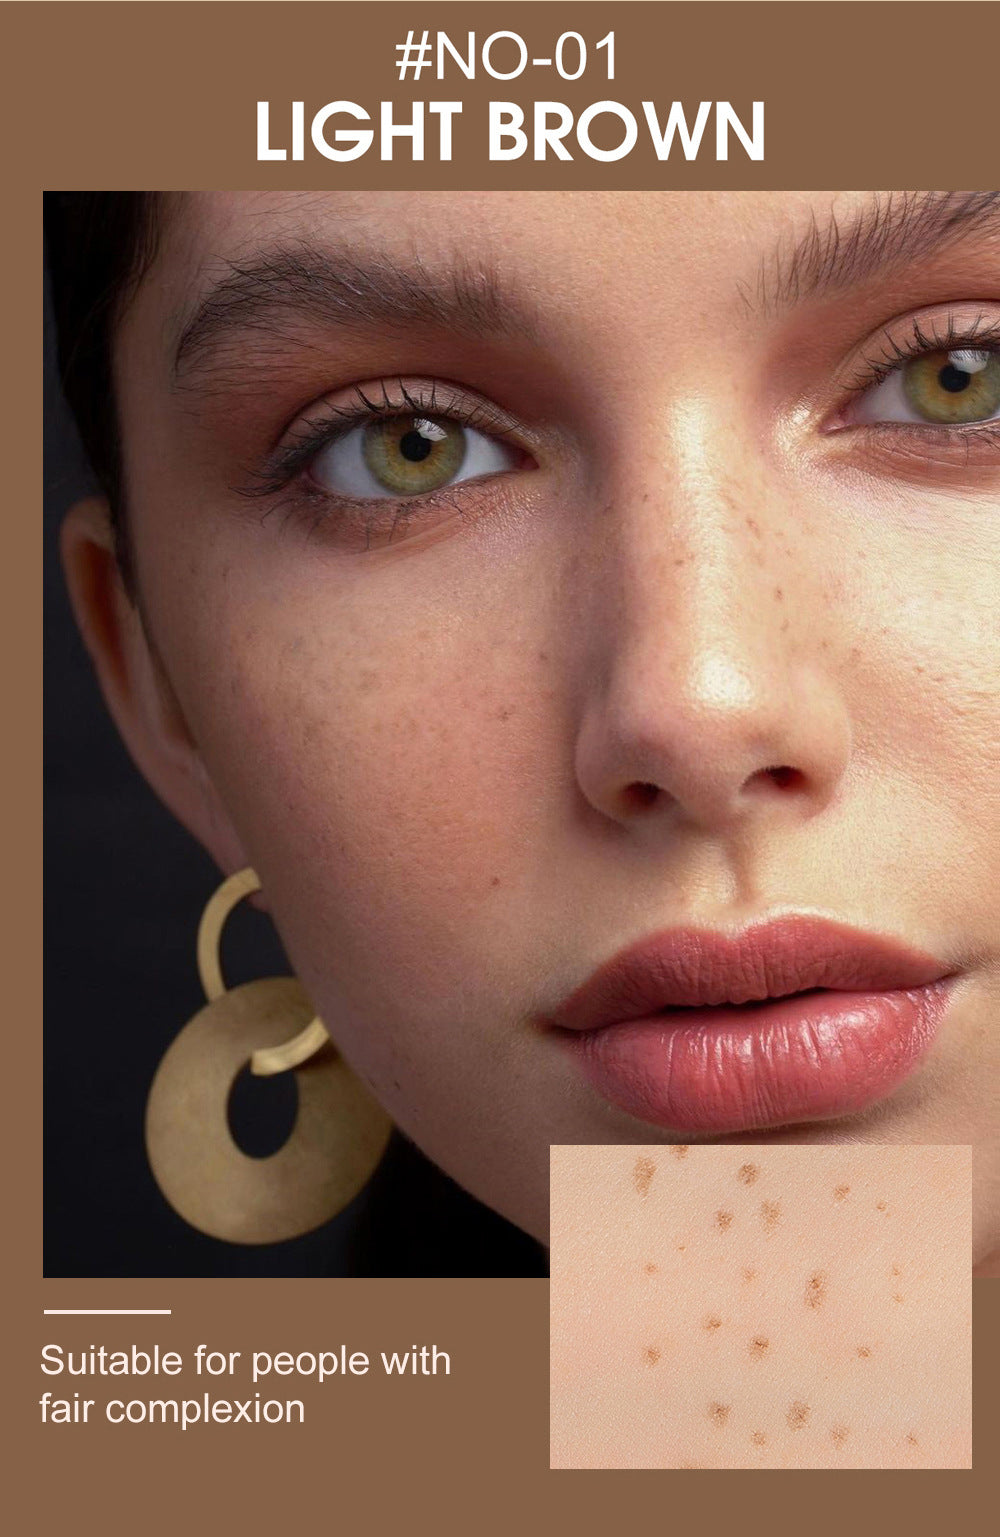 HANDAIYAN Makeup Freckles Natural Simulation Is Not Easy To Fade Makeup Spotting Pen